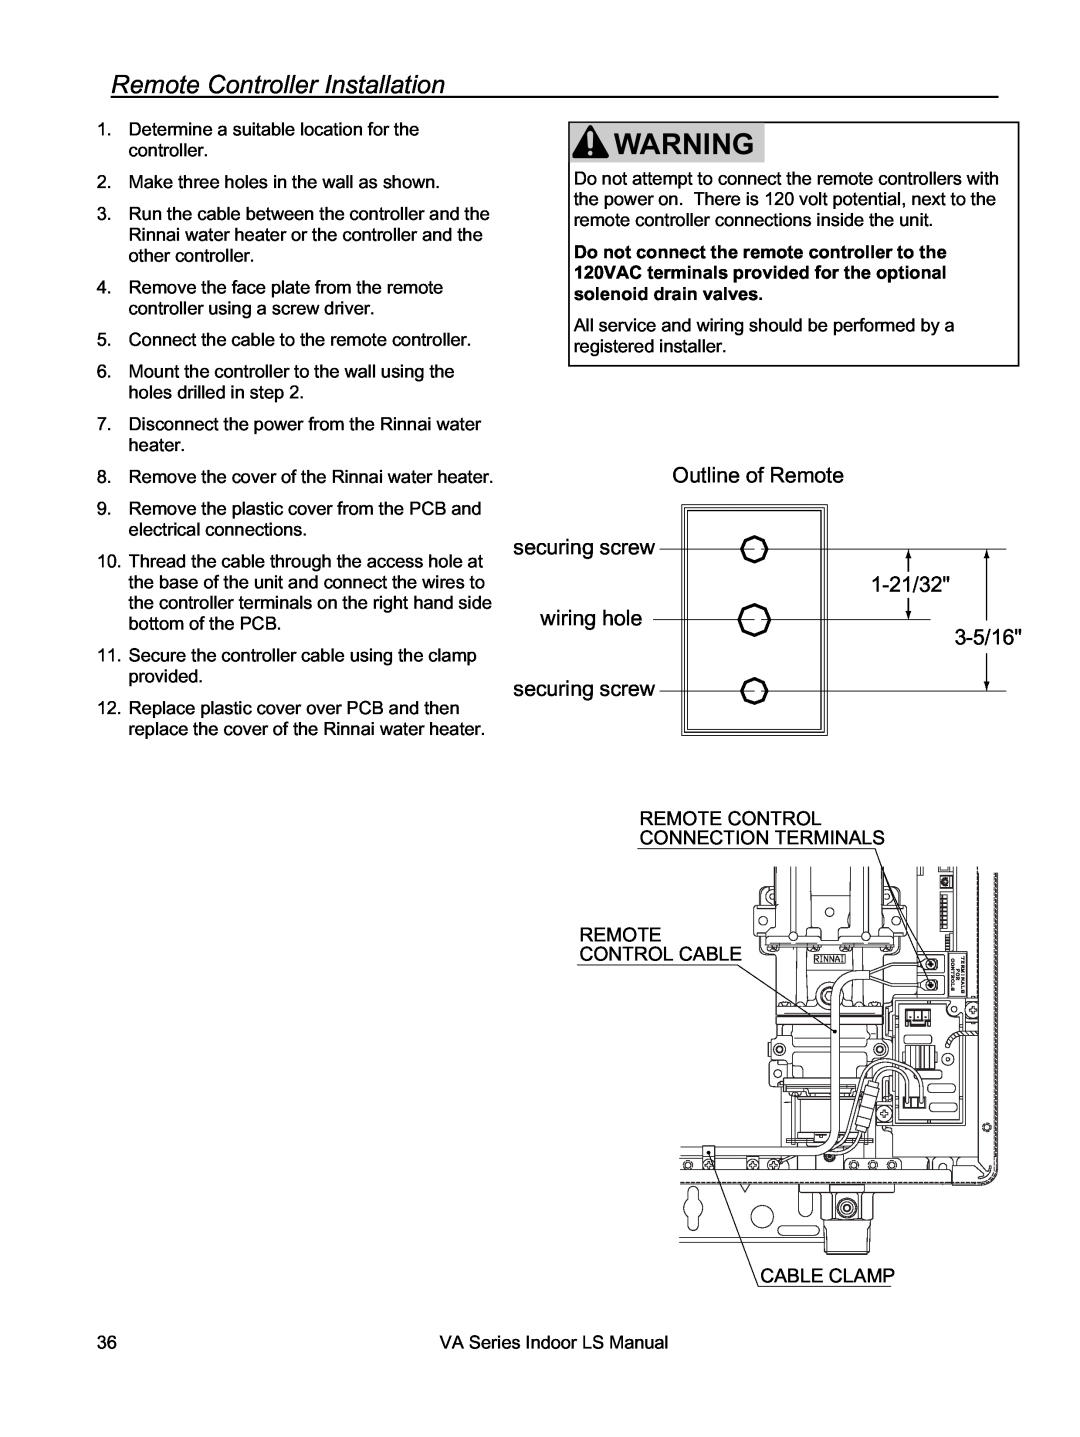 Rinnai REU-VA3237FFU Remote Controller Installation, Outline of Remote, securing screw wiring hole securing screw 